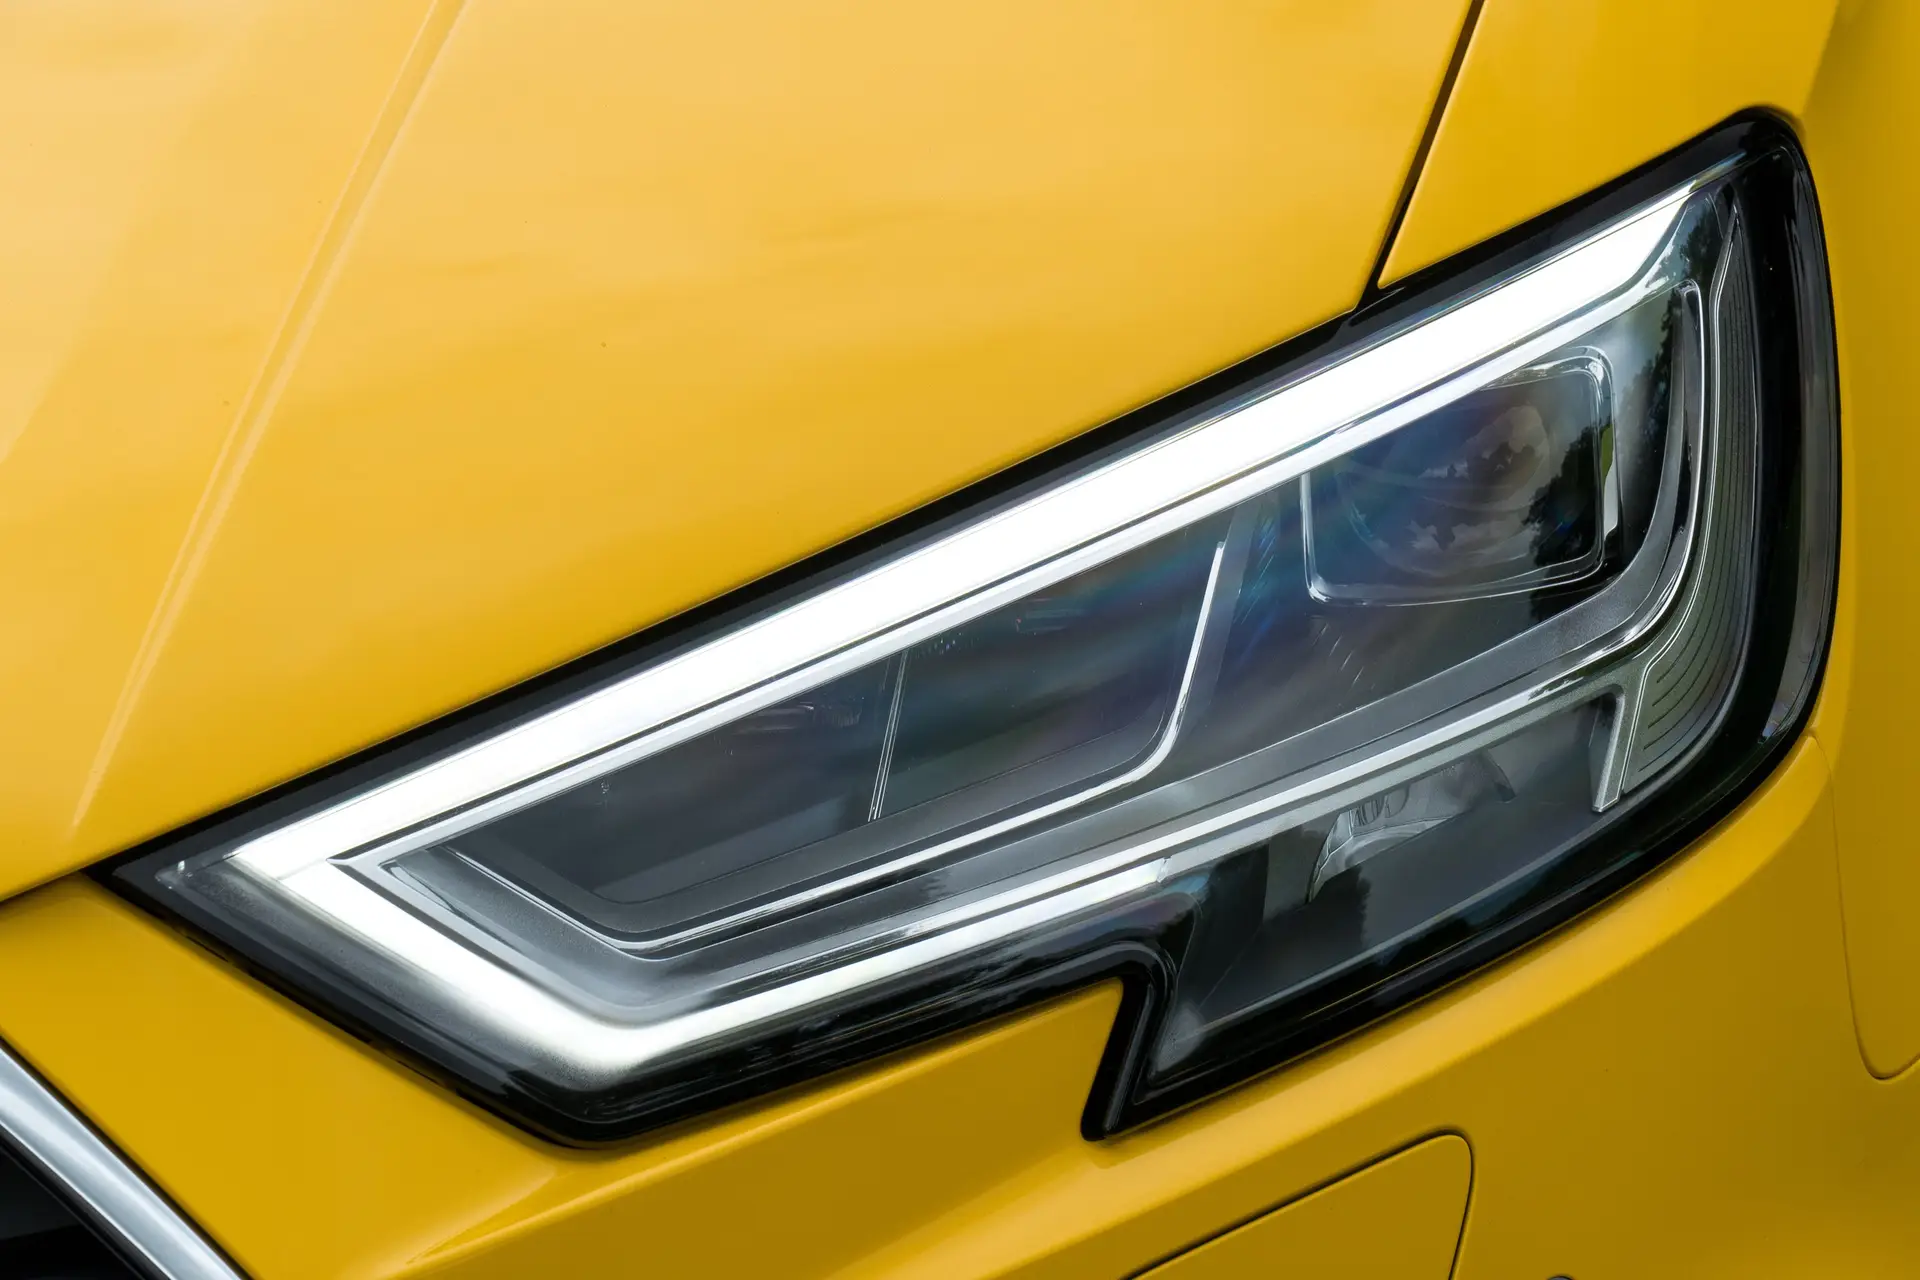  Audi A3 Cabriolet Review 2023: close up exterior photo of the Audi A3 Cabriolet headlight